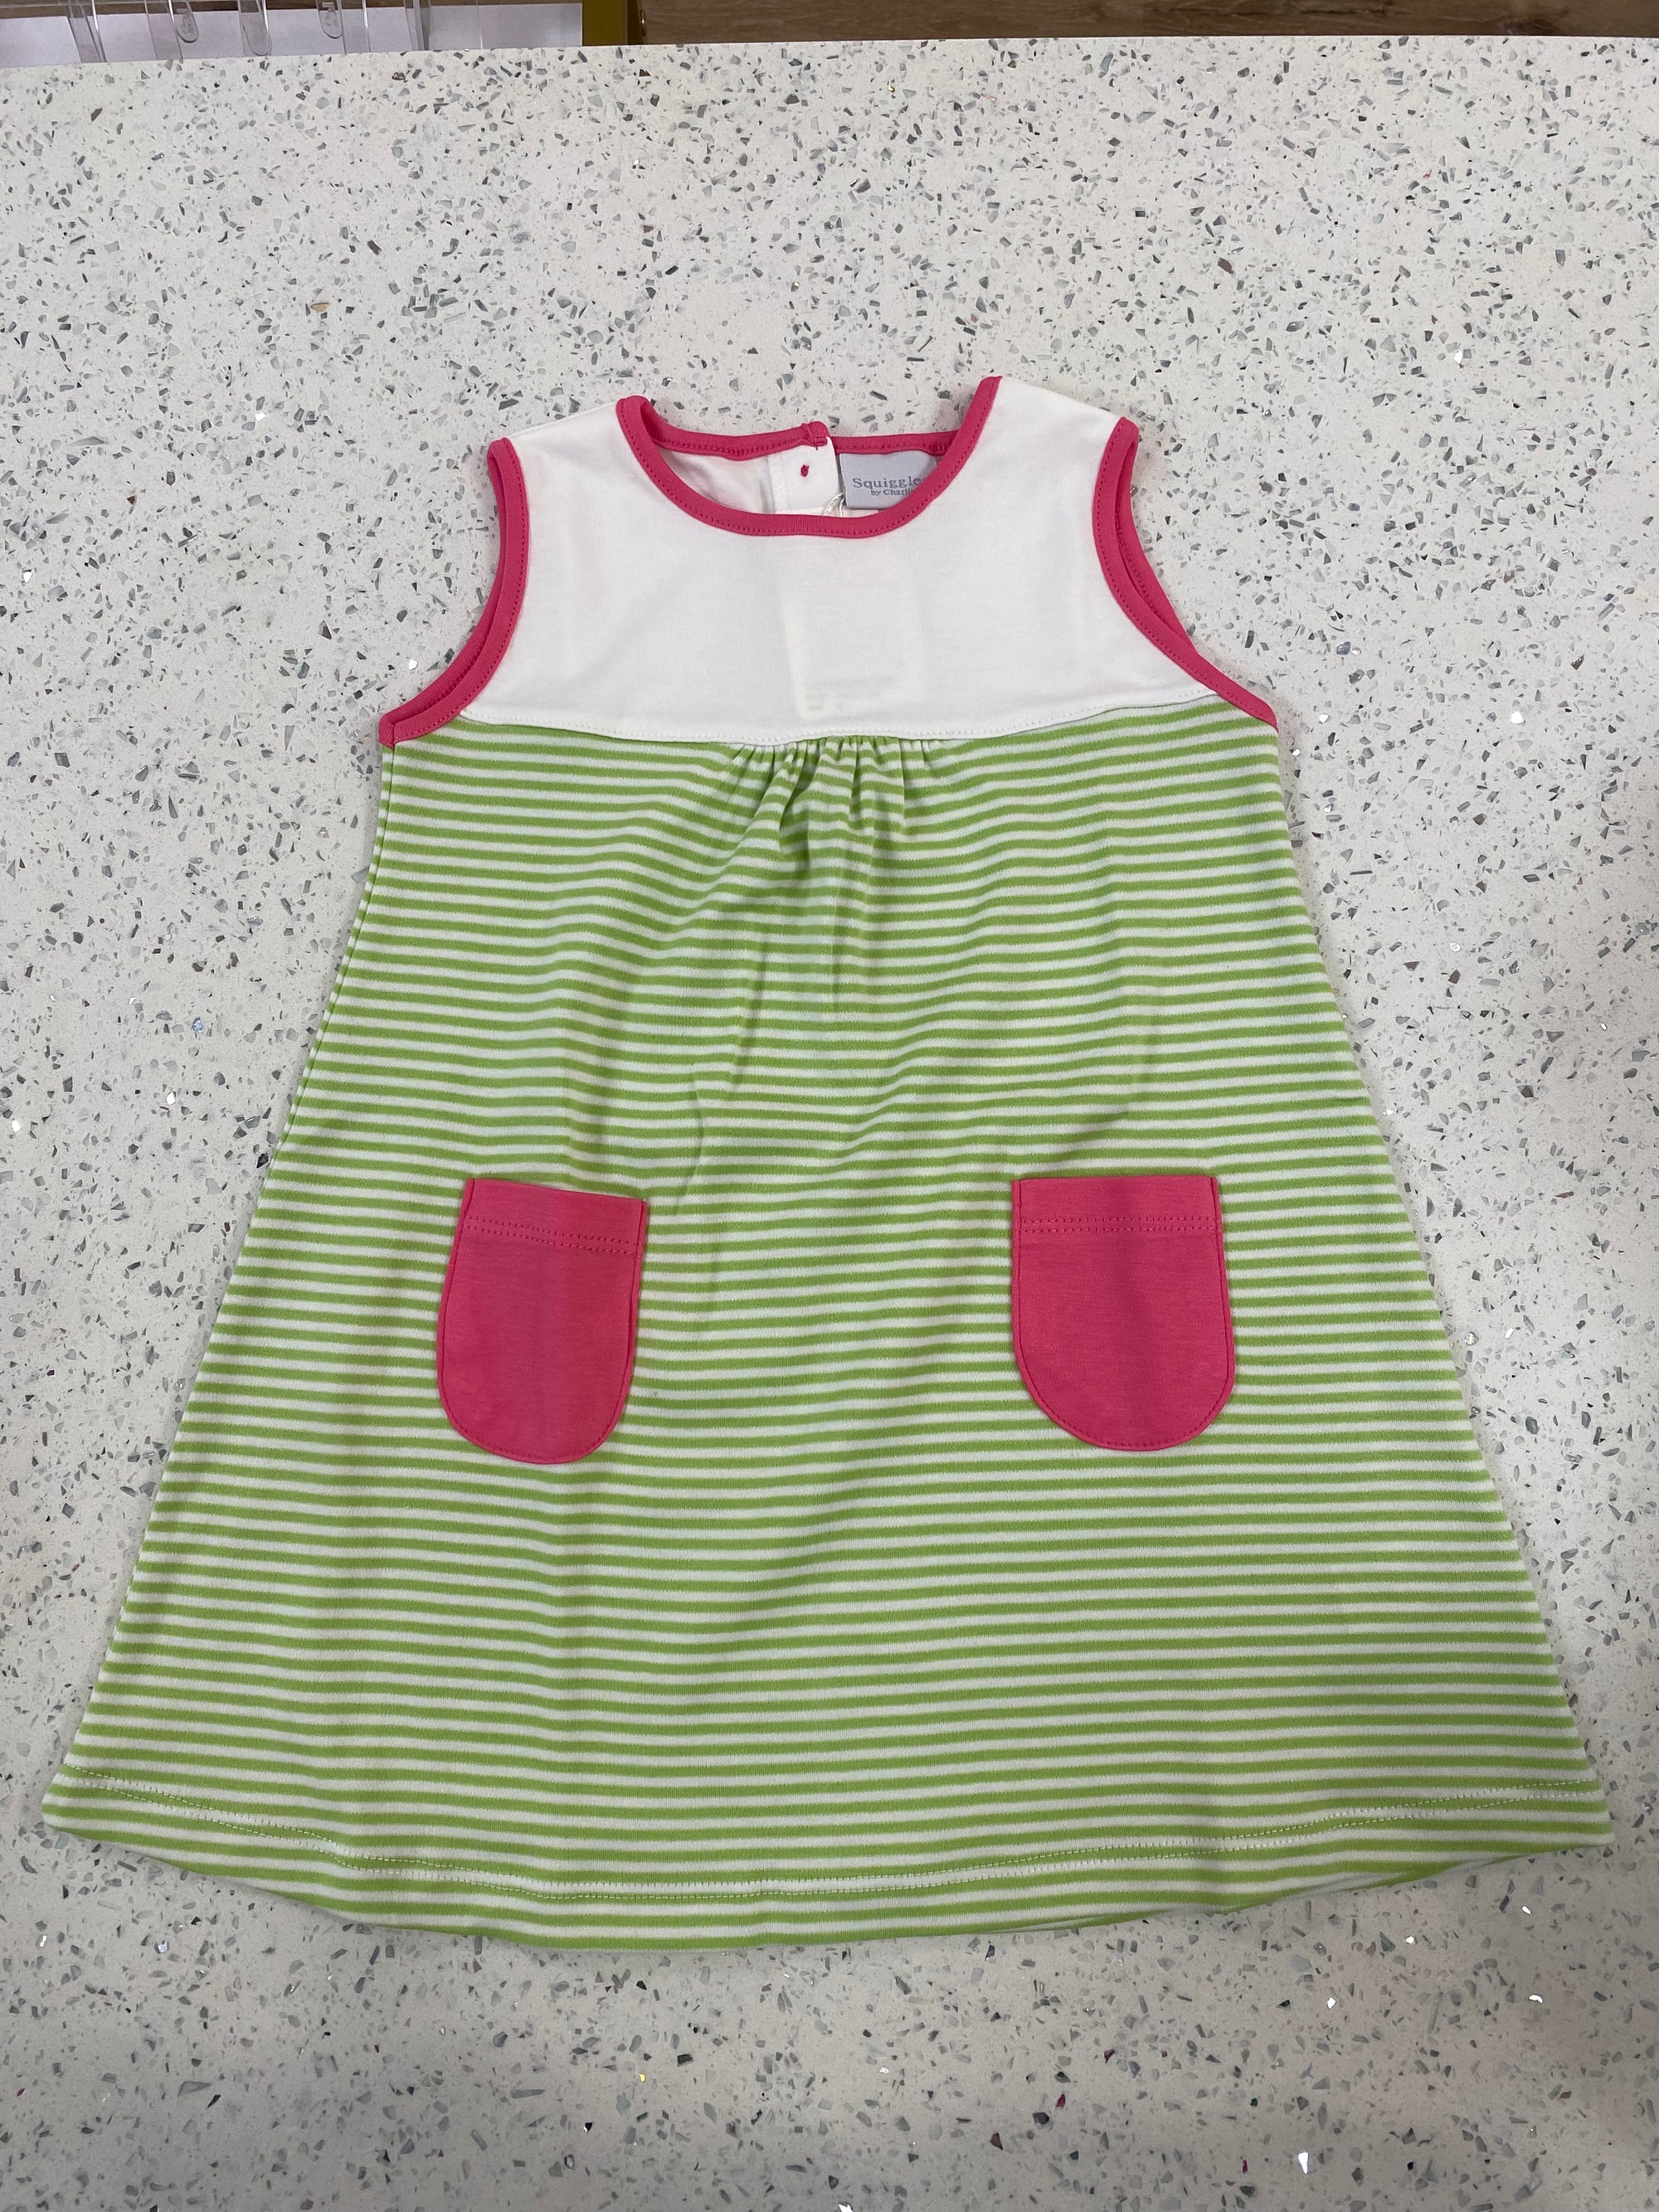 Squiggles: Sleeveless Pink/Green Pocket Dress